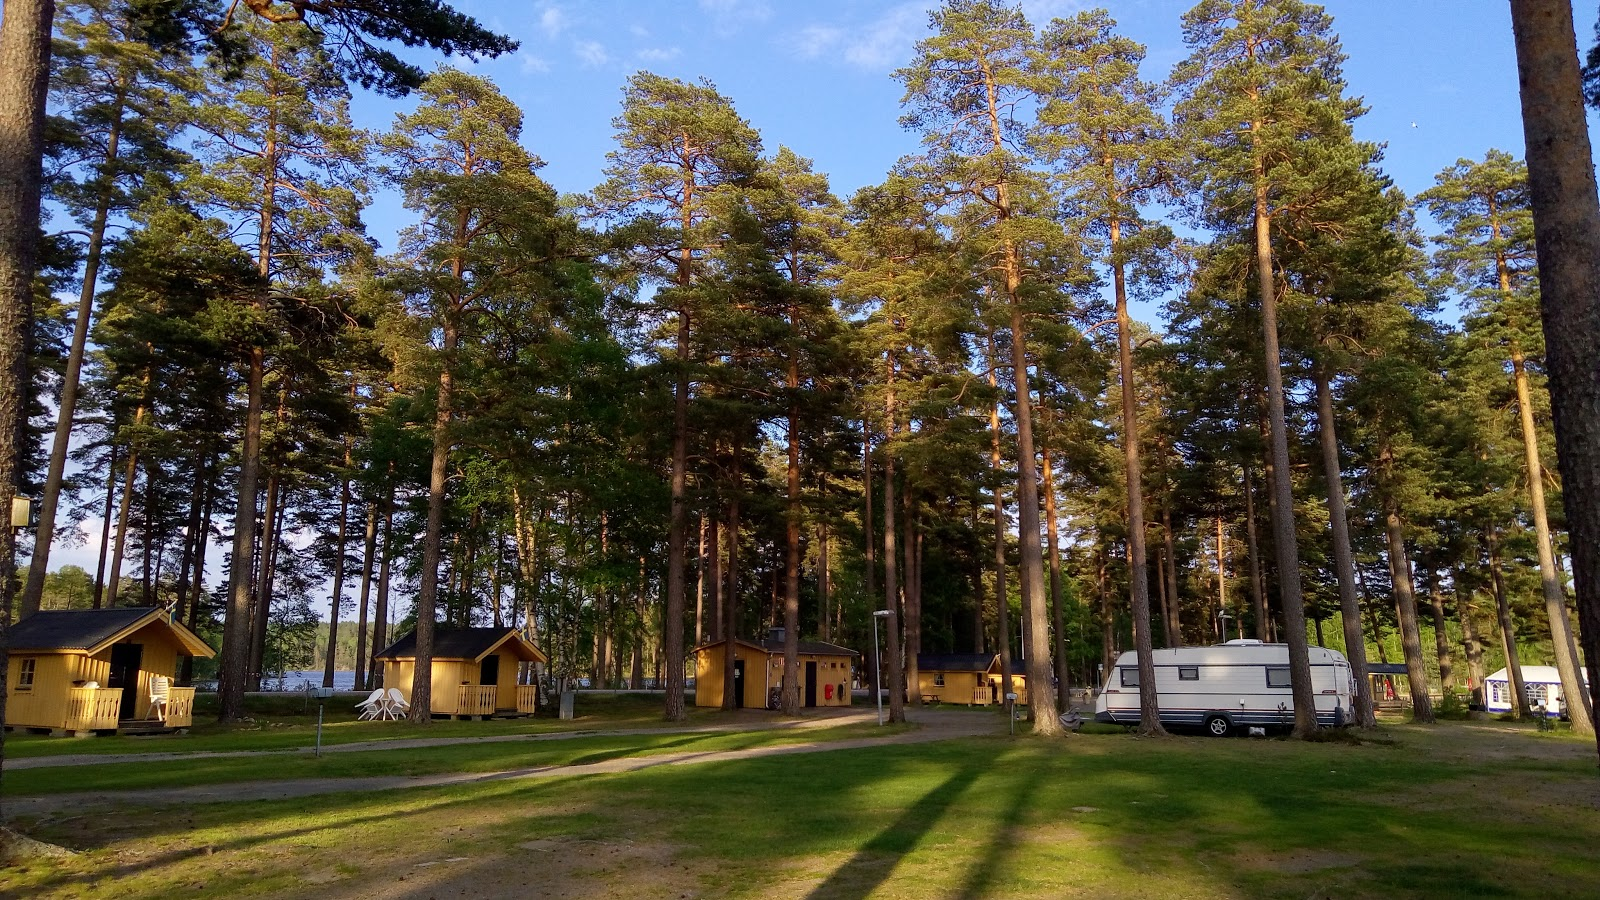 Revelbadets Camping